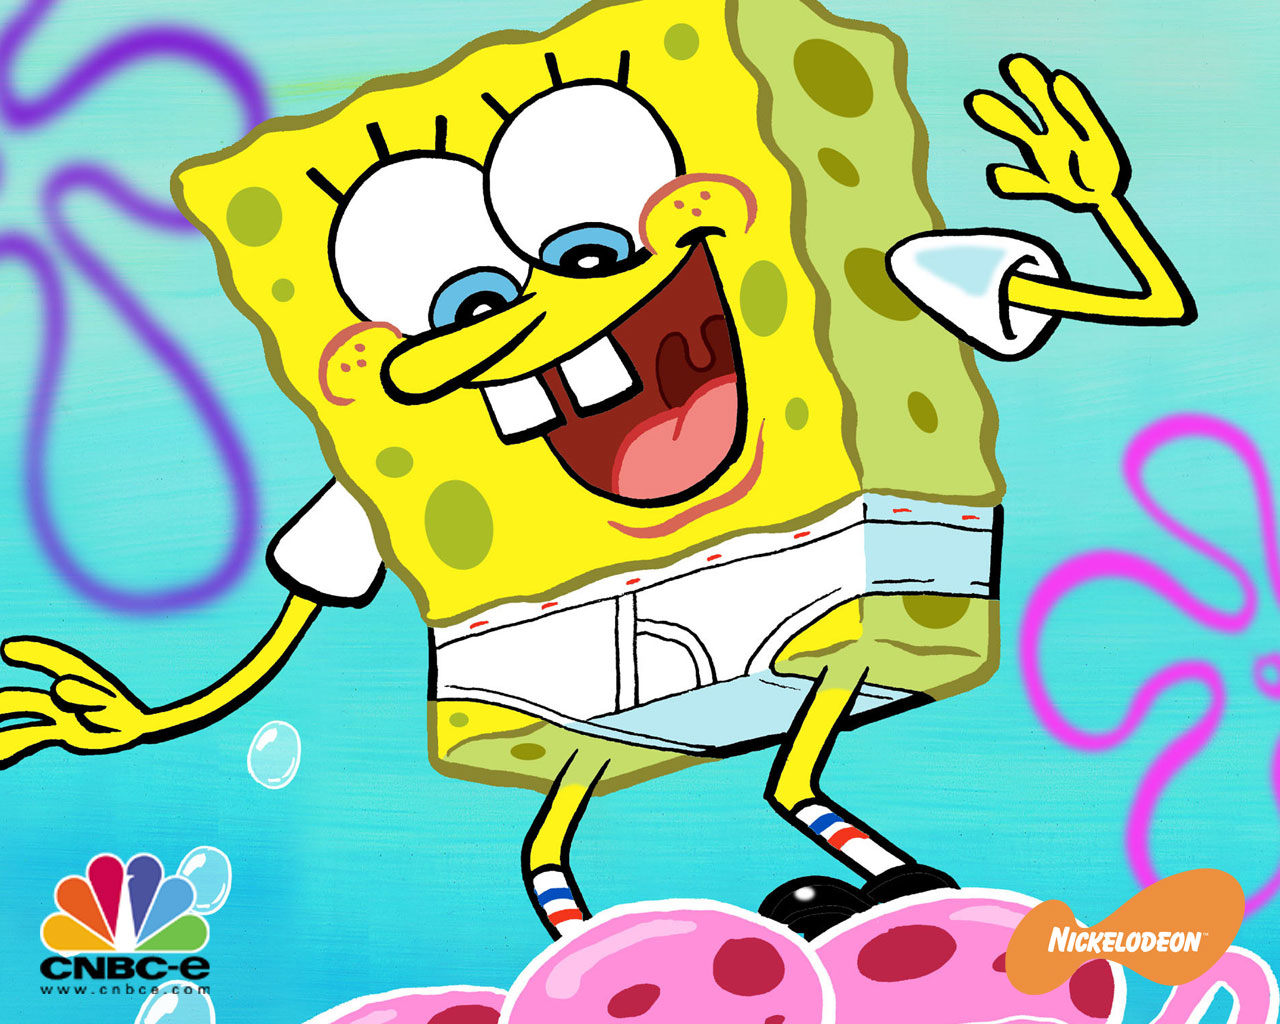 Sponge Bob Square Pants HD Wallpaper High Resolution Background